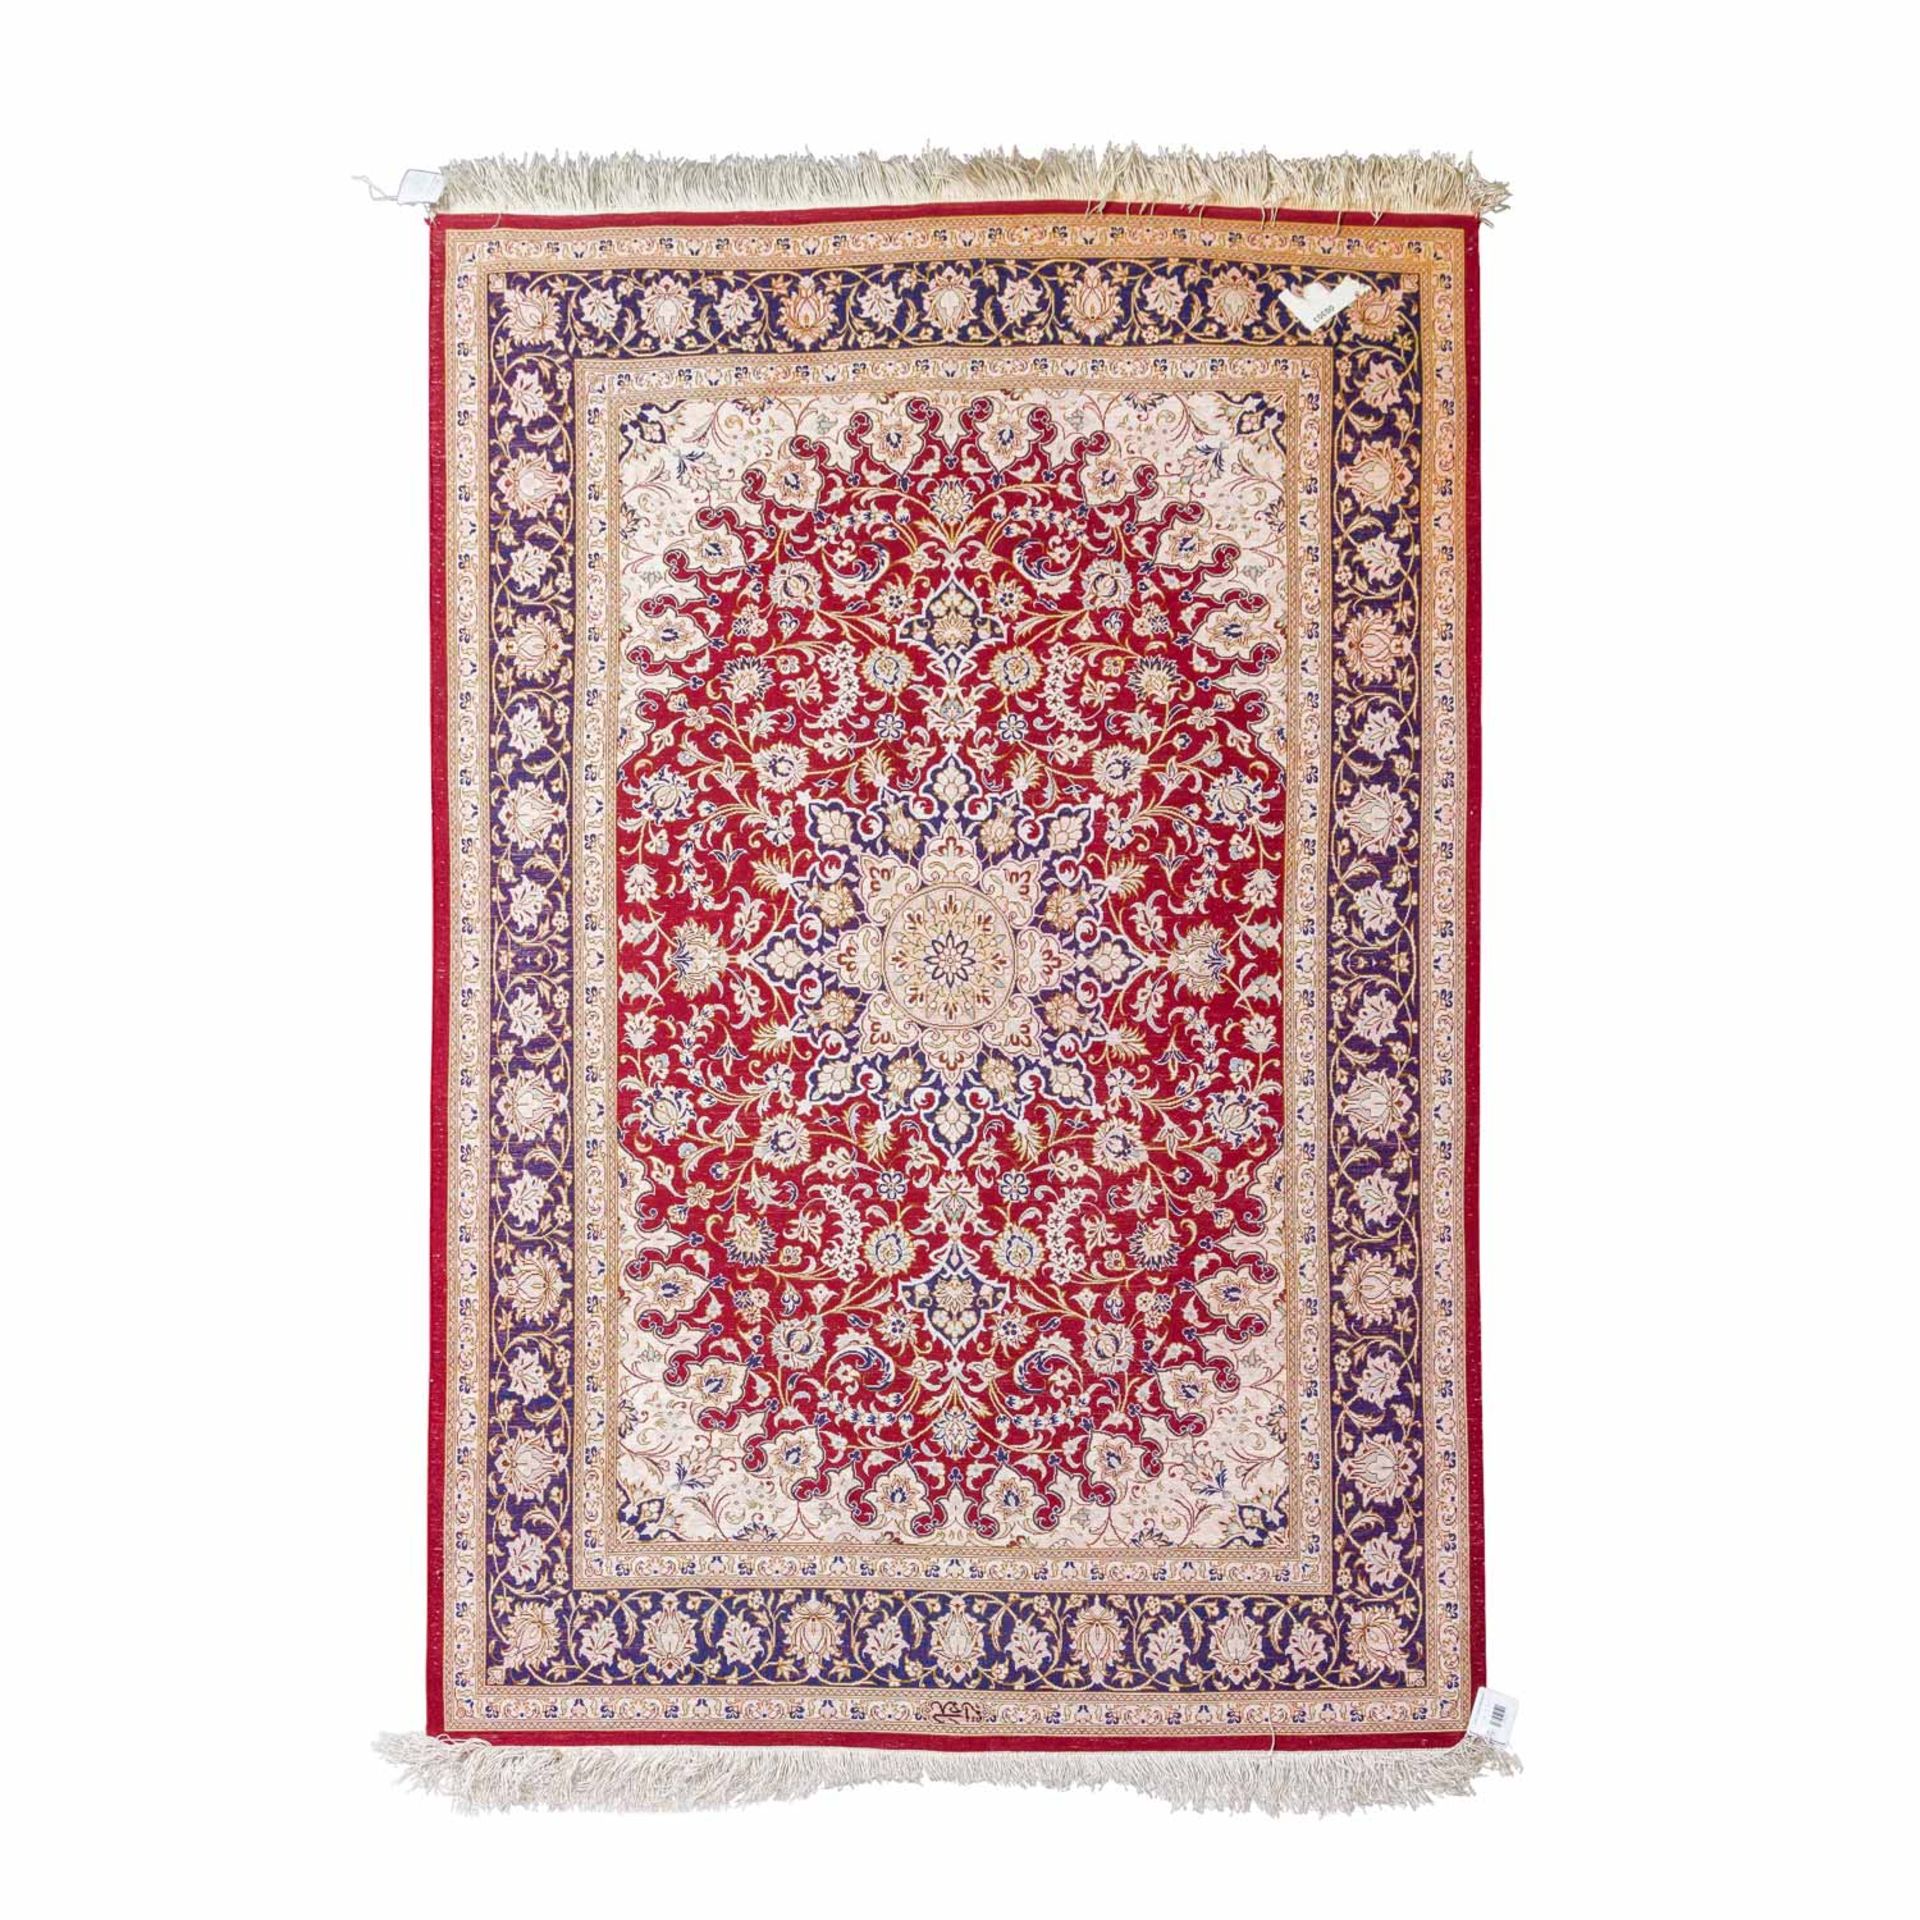 Orientteppich aus Seide. GHOM/IRAN, 20. Jh., 150x100 cm - Image 2 of 4